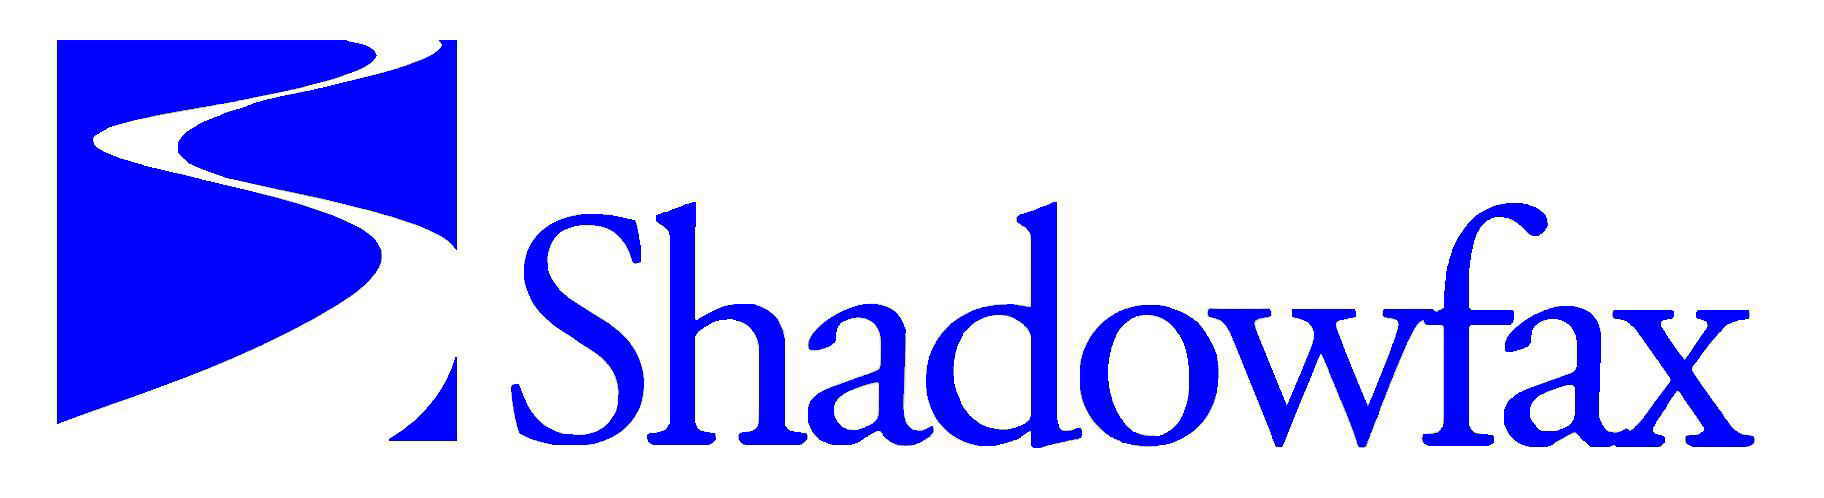 Shadowfax Corp logo